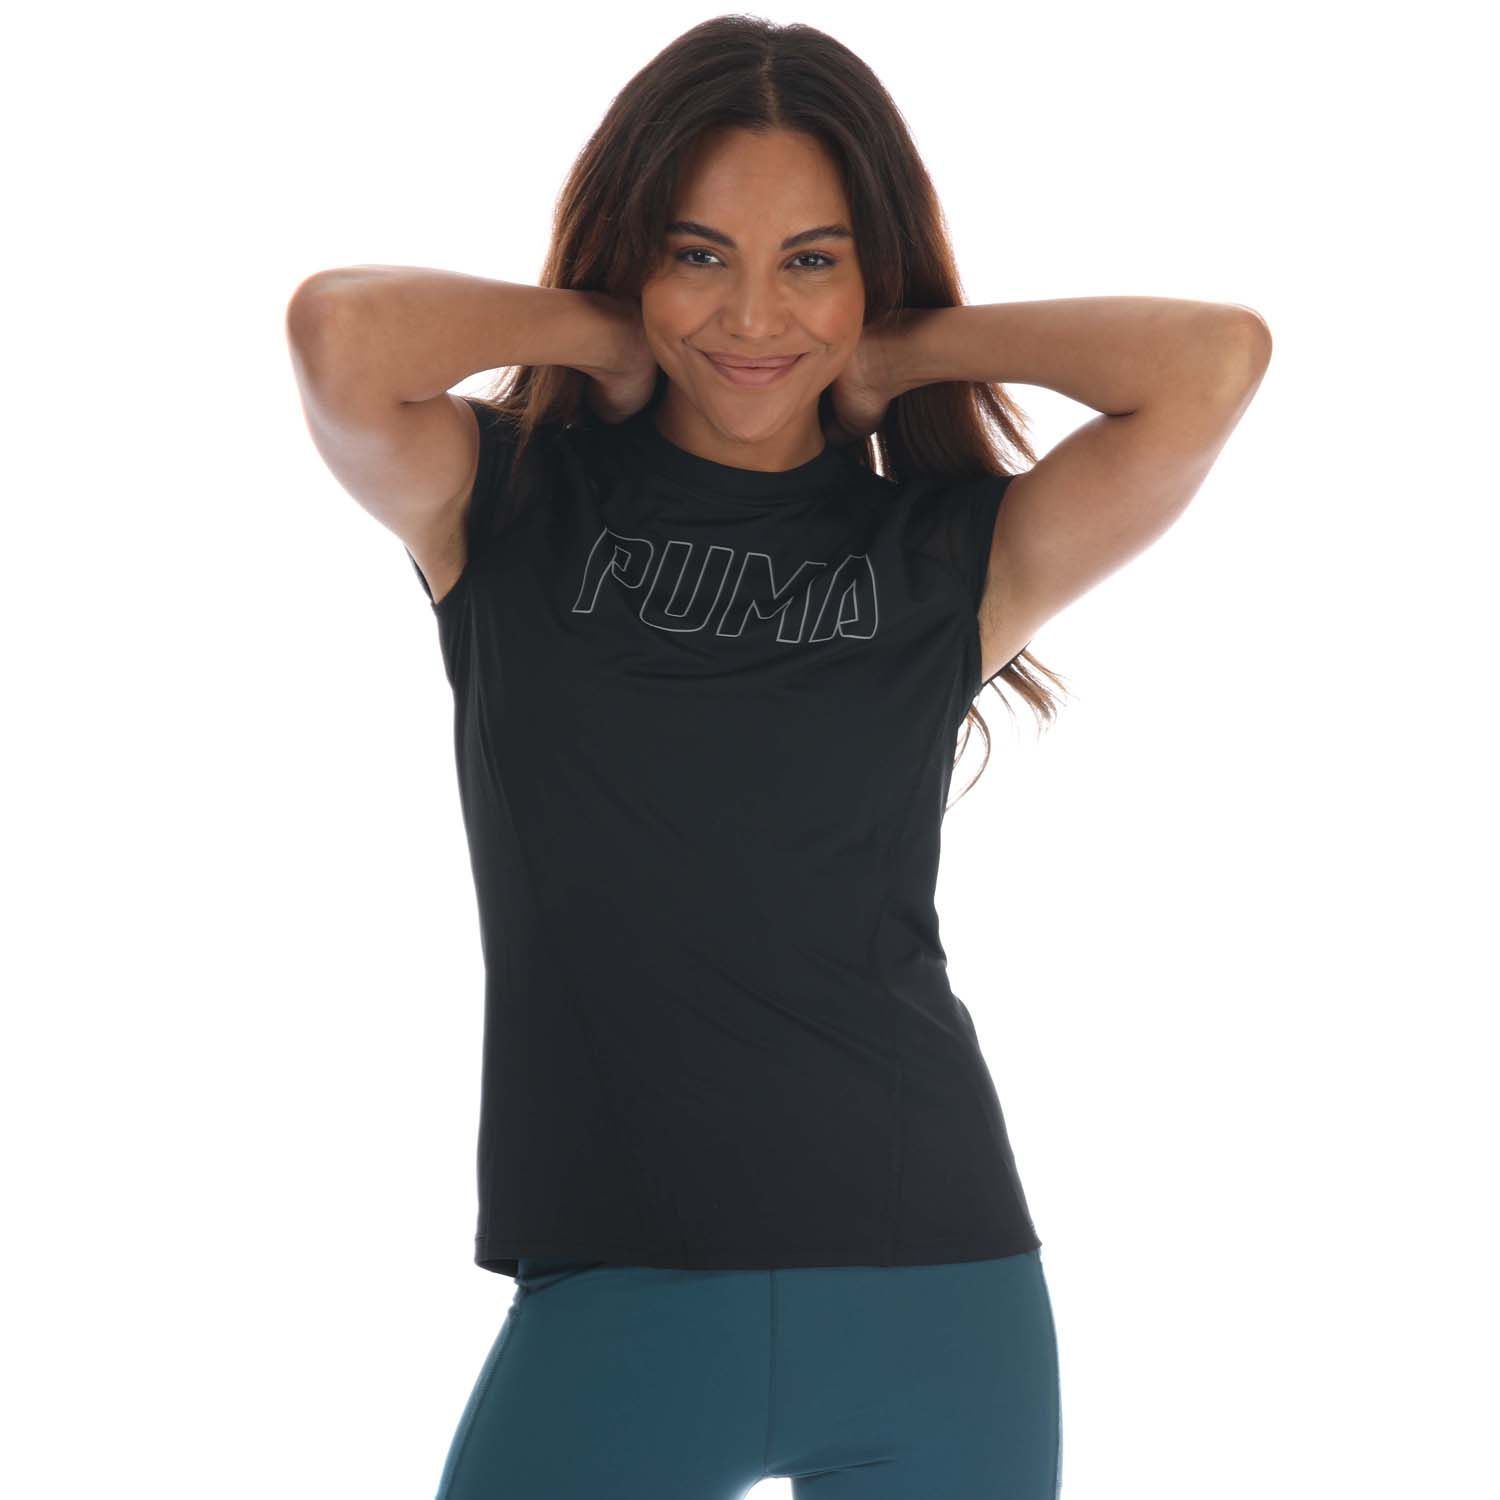 Womens Puma Training T- Shirt in black.- Crew neck.- Short sleeves.- Mesh panels on the shoulders.- Regular fit.- Shell: 92% Polyester  8% Elastane. - Ref: 51804701